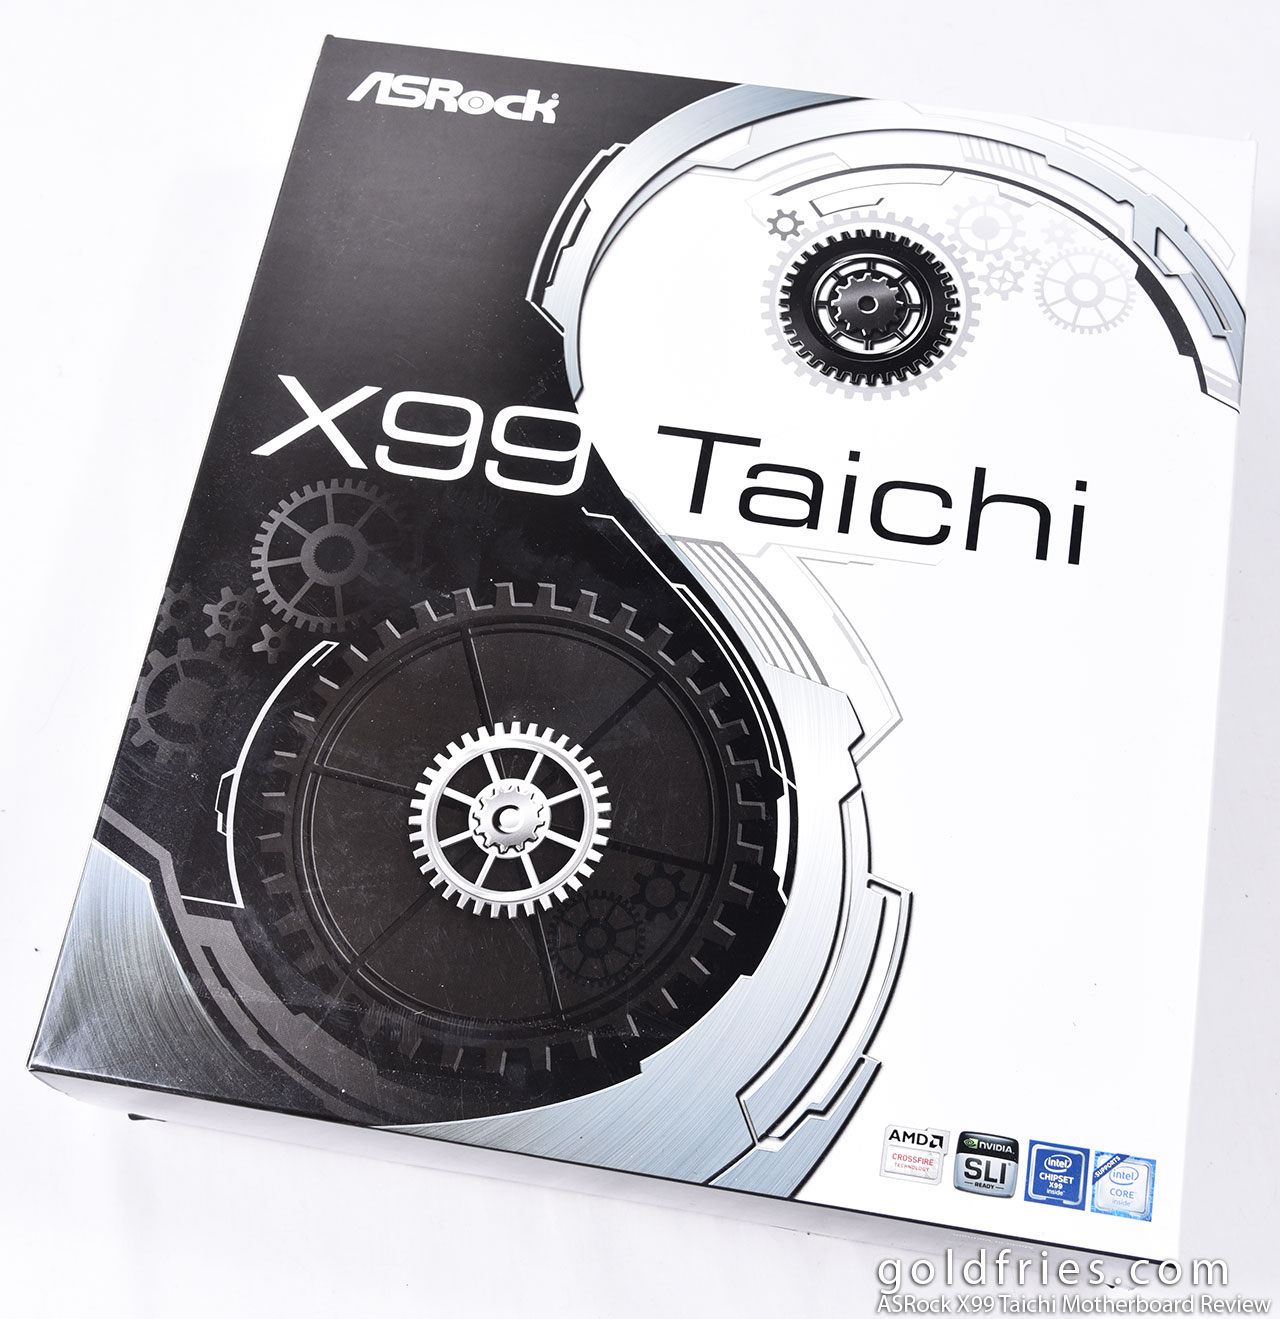 ASRock X99 Taichi Motherboard Review